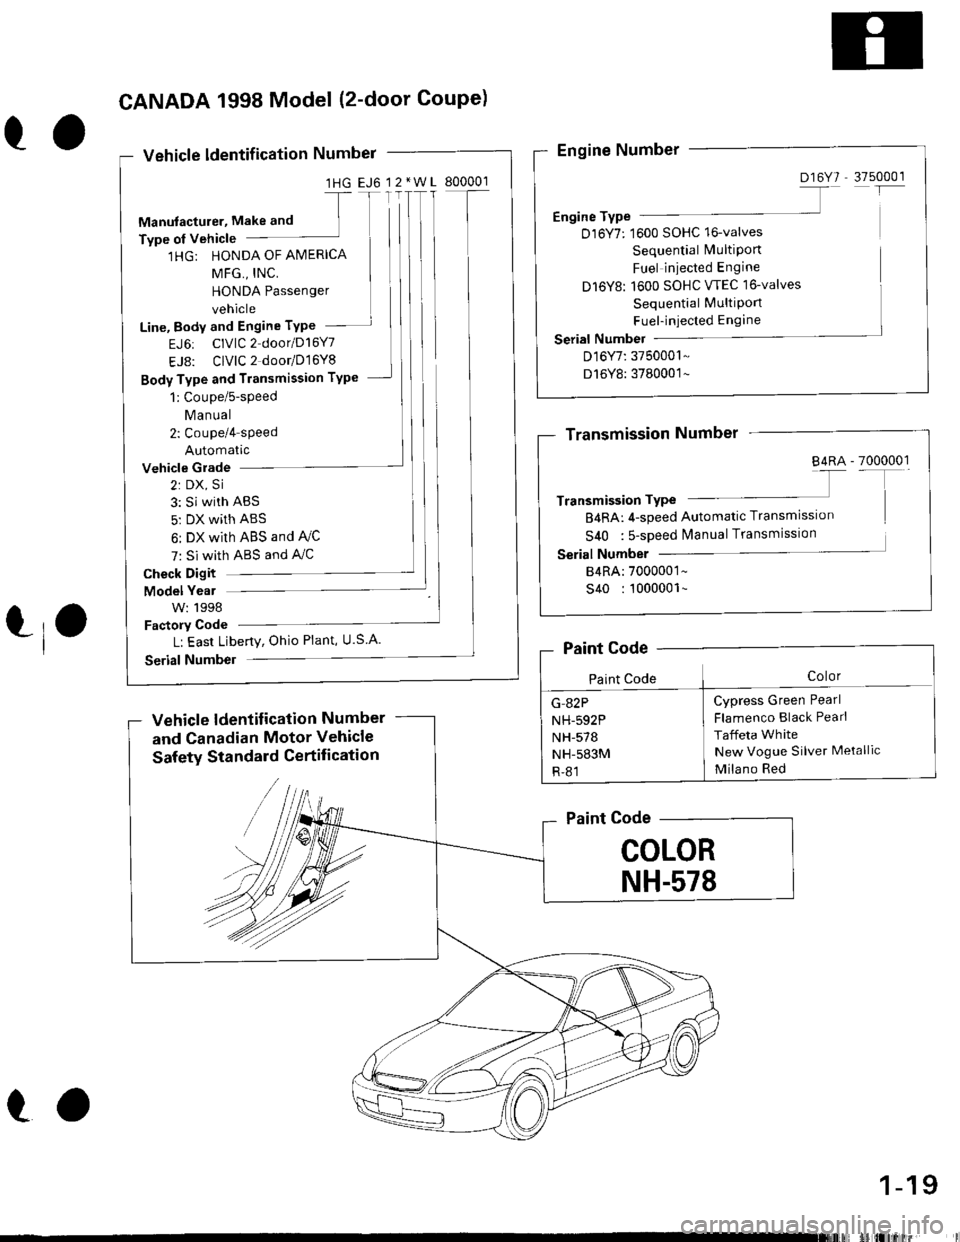 HONDA CIVIC 1996 6.G Owners Manual Vehicle ldentif ication Numbel
1HG EJ6 12*W
1HG: HONDA OF AMERICA
MFG,, INC,
HONDA Passenger
vehicle
Line, Body and Engine TYPe
EJ6: CIVIC 2 door/D16Y7
EJ8: CIVIC 2 dootD16Y8
Body Type and Transmissio